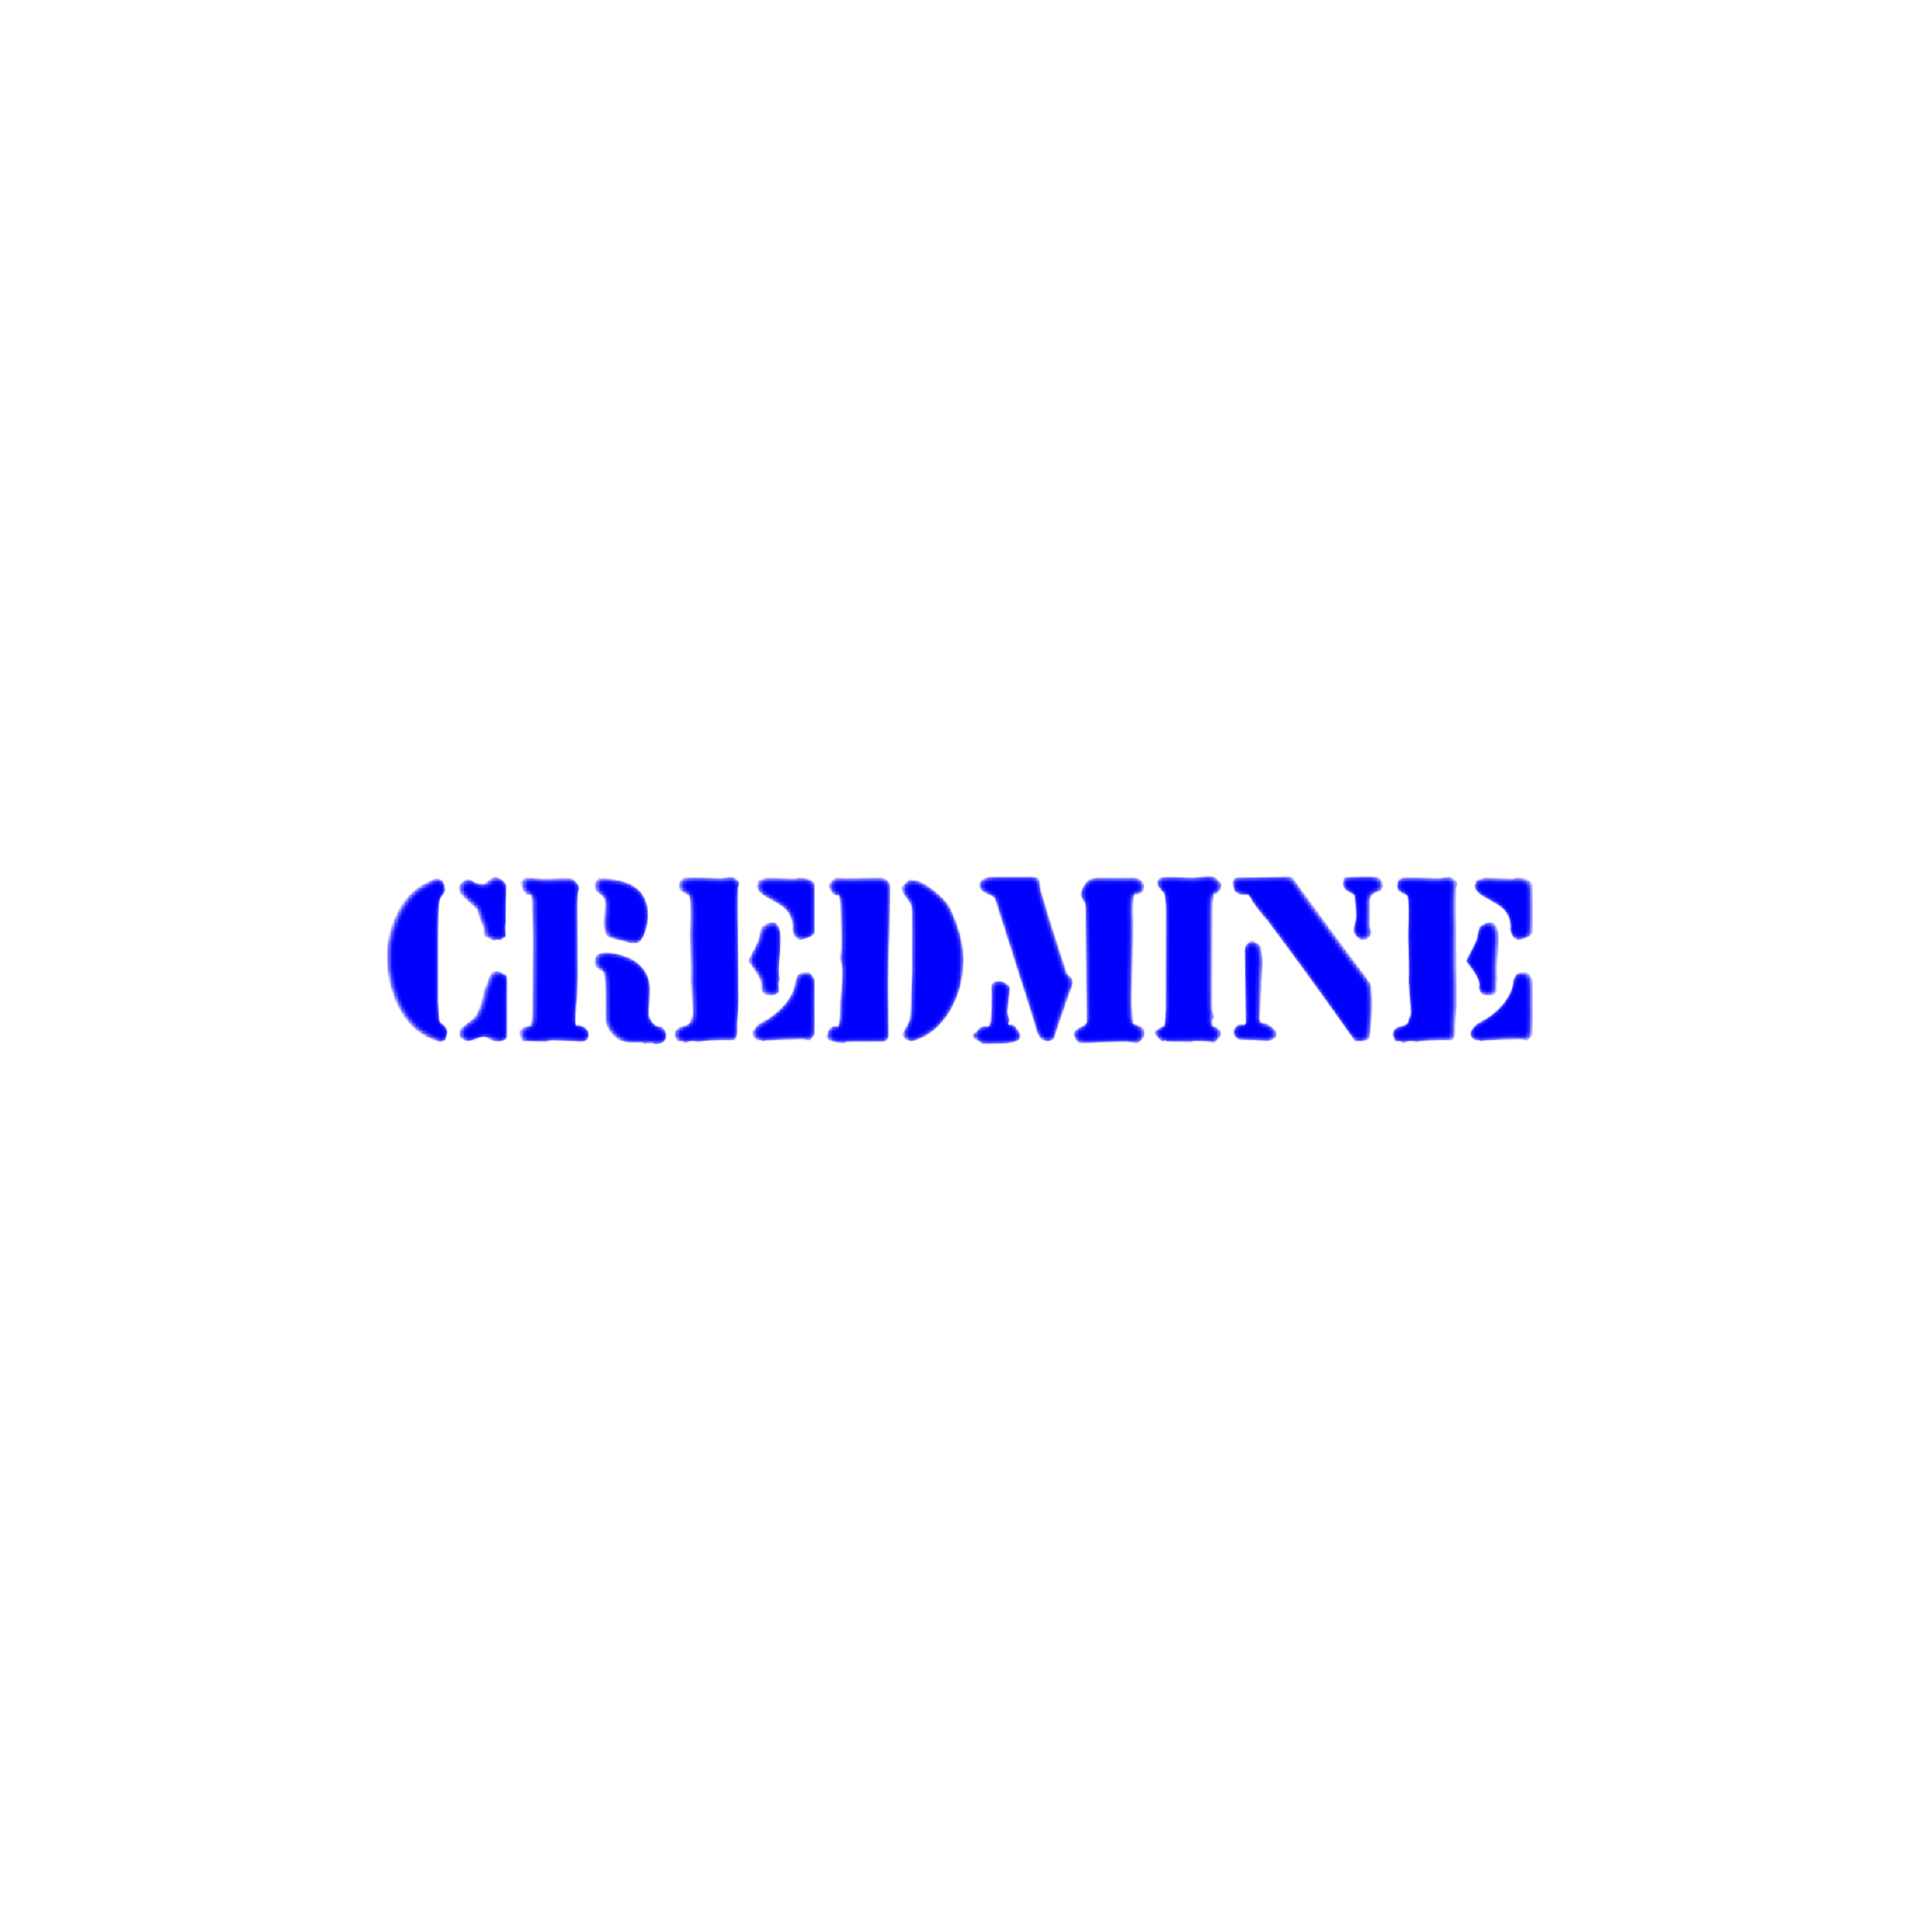 CredMine